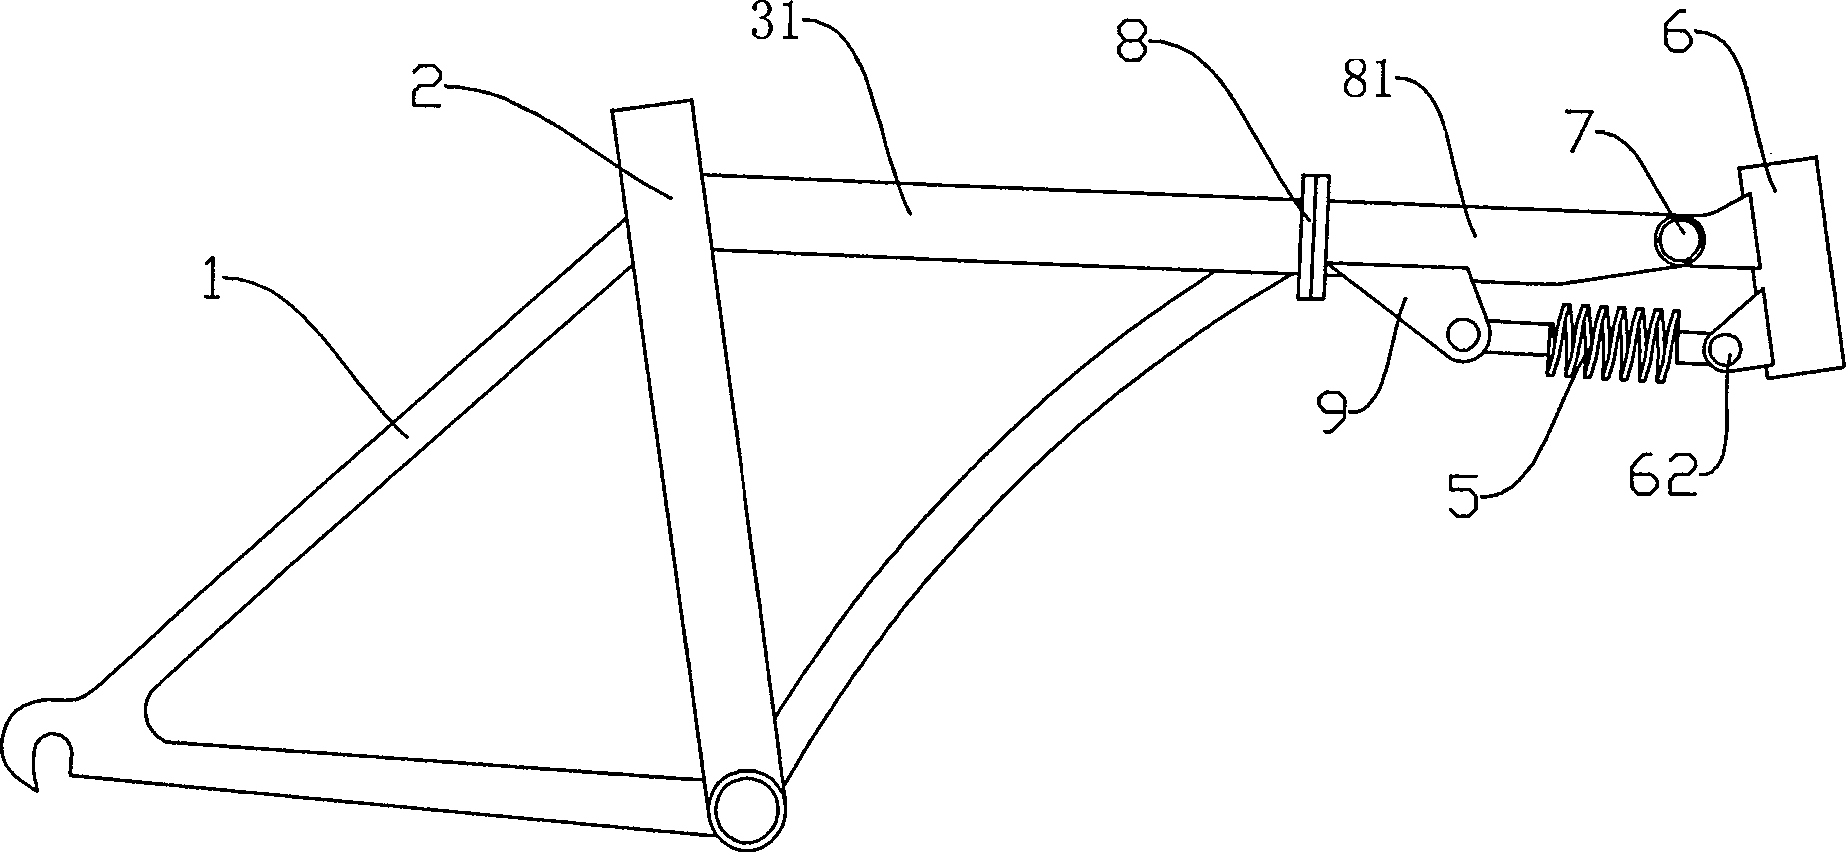 Buffering bicycle frame